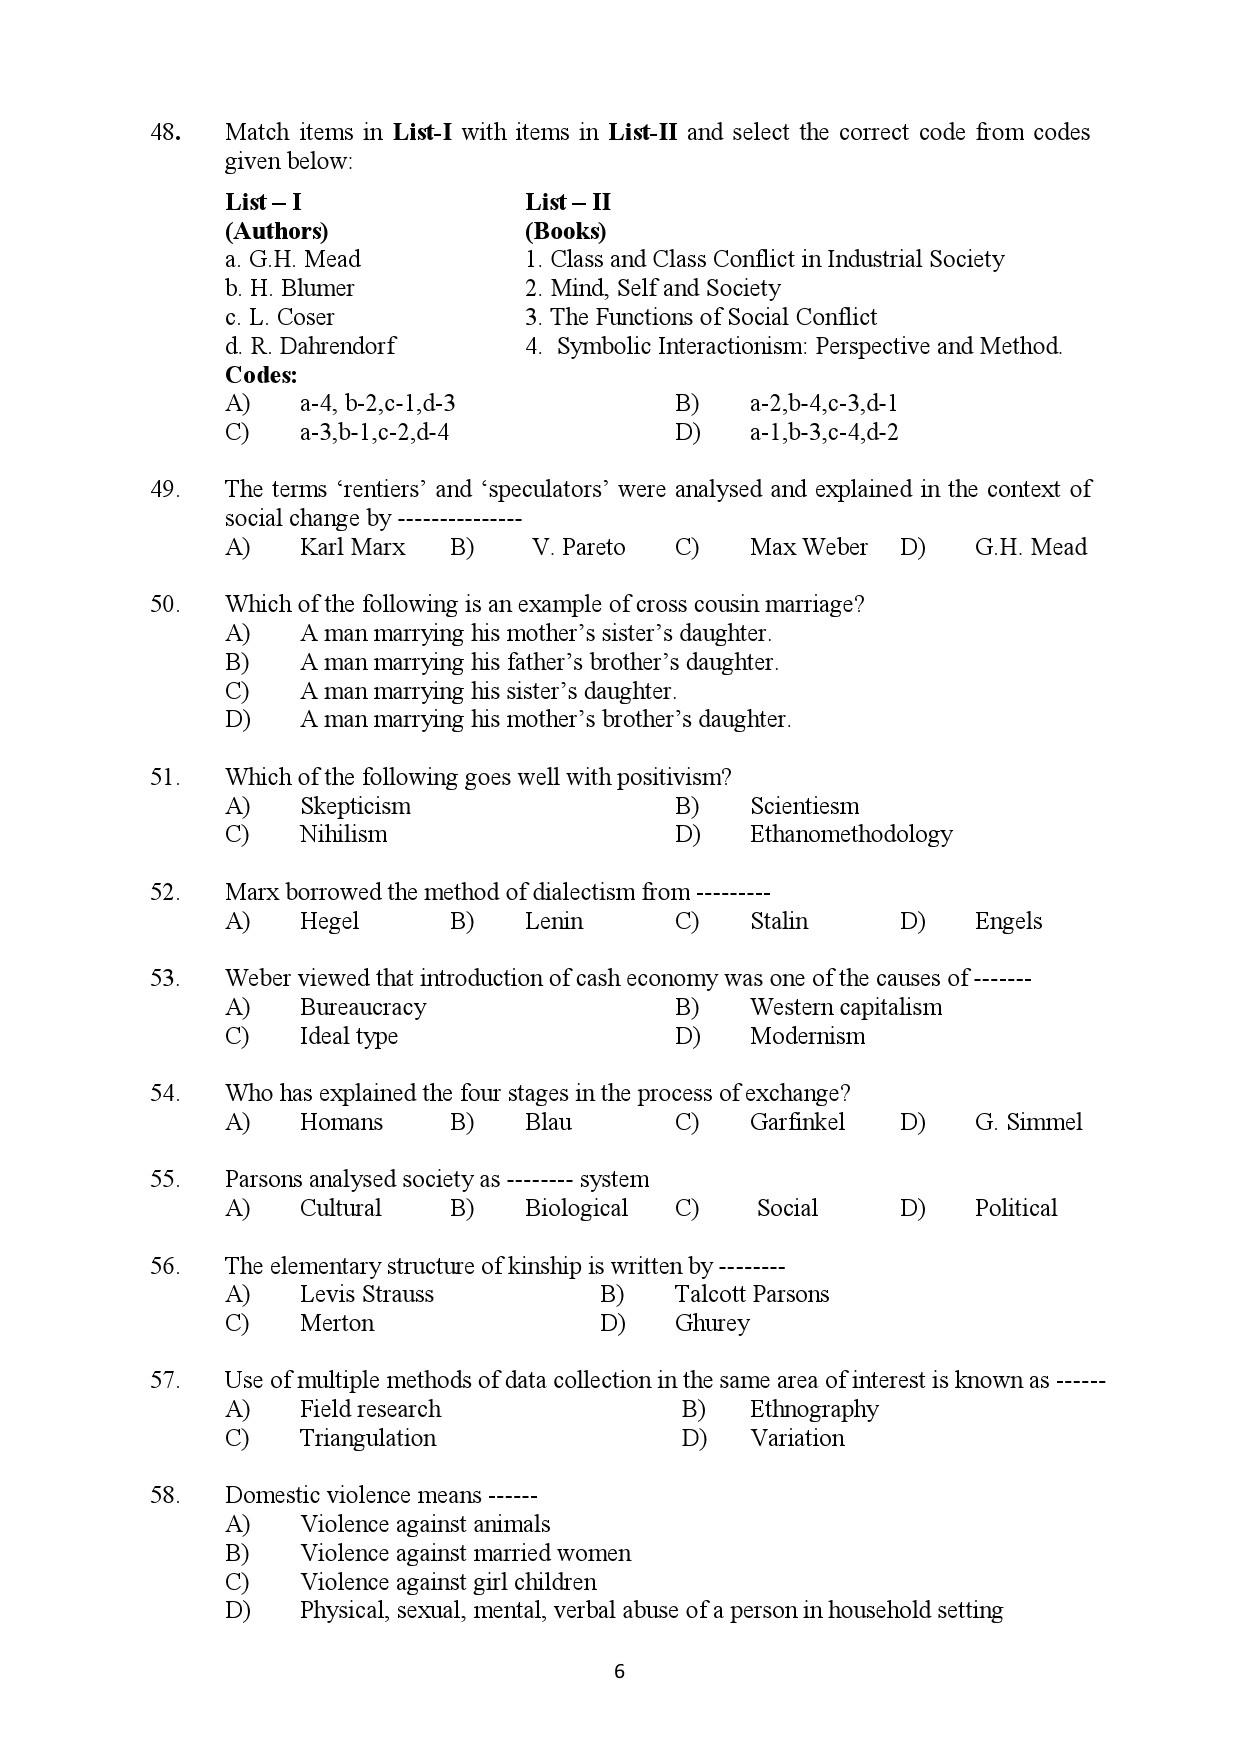 Kerala SET Sociology Exam Question Paper February 2019 6